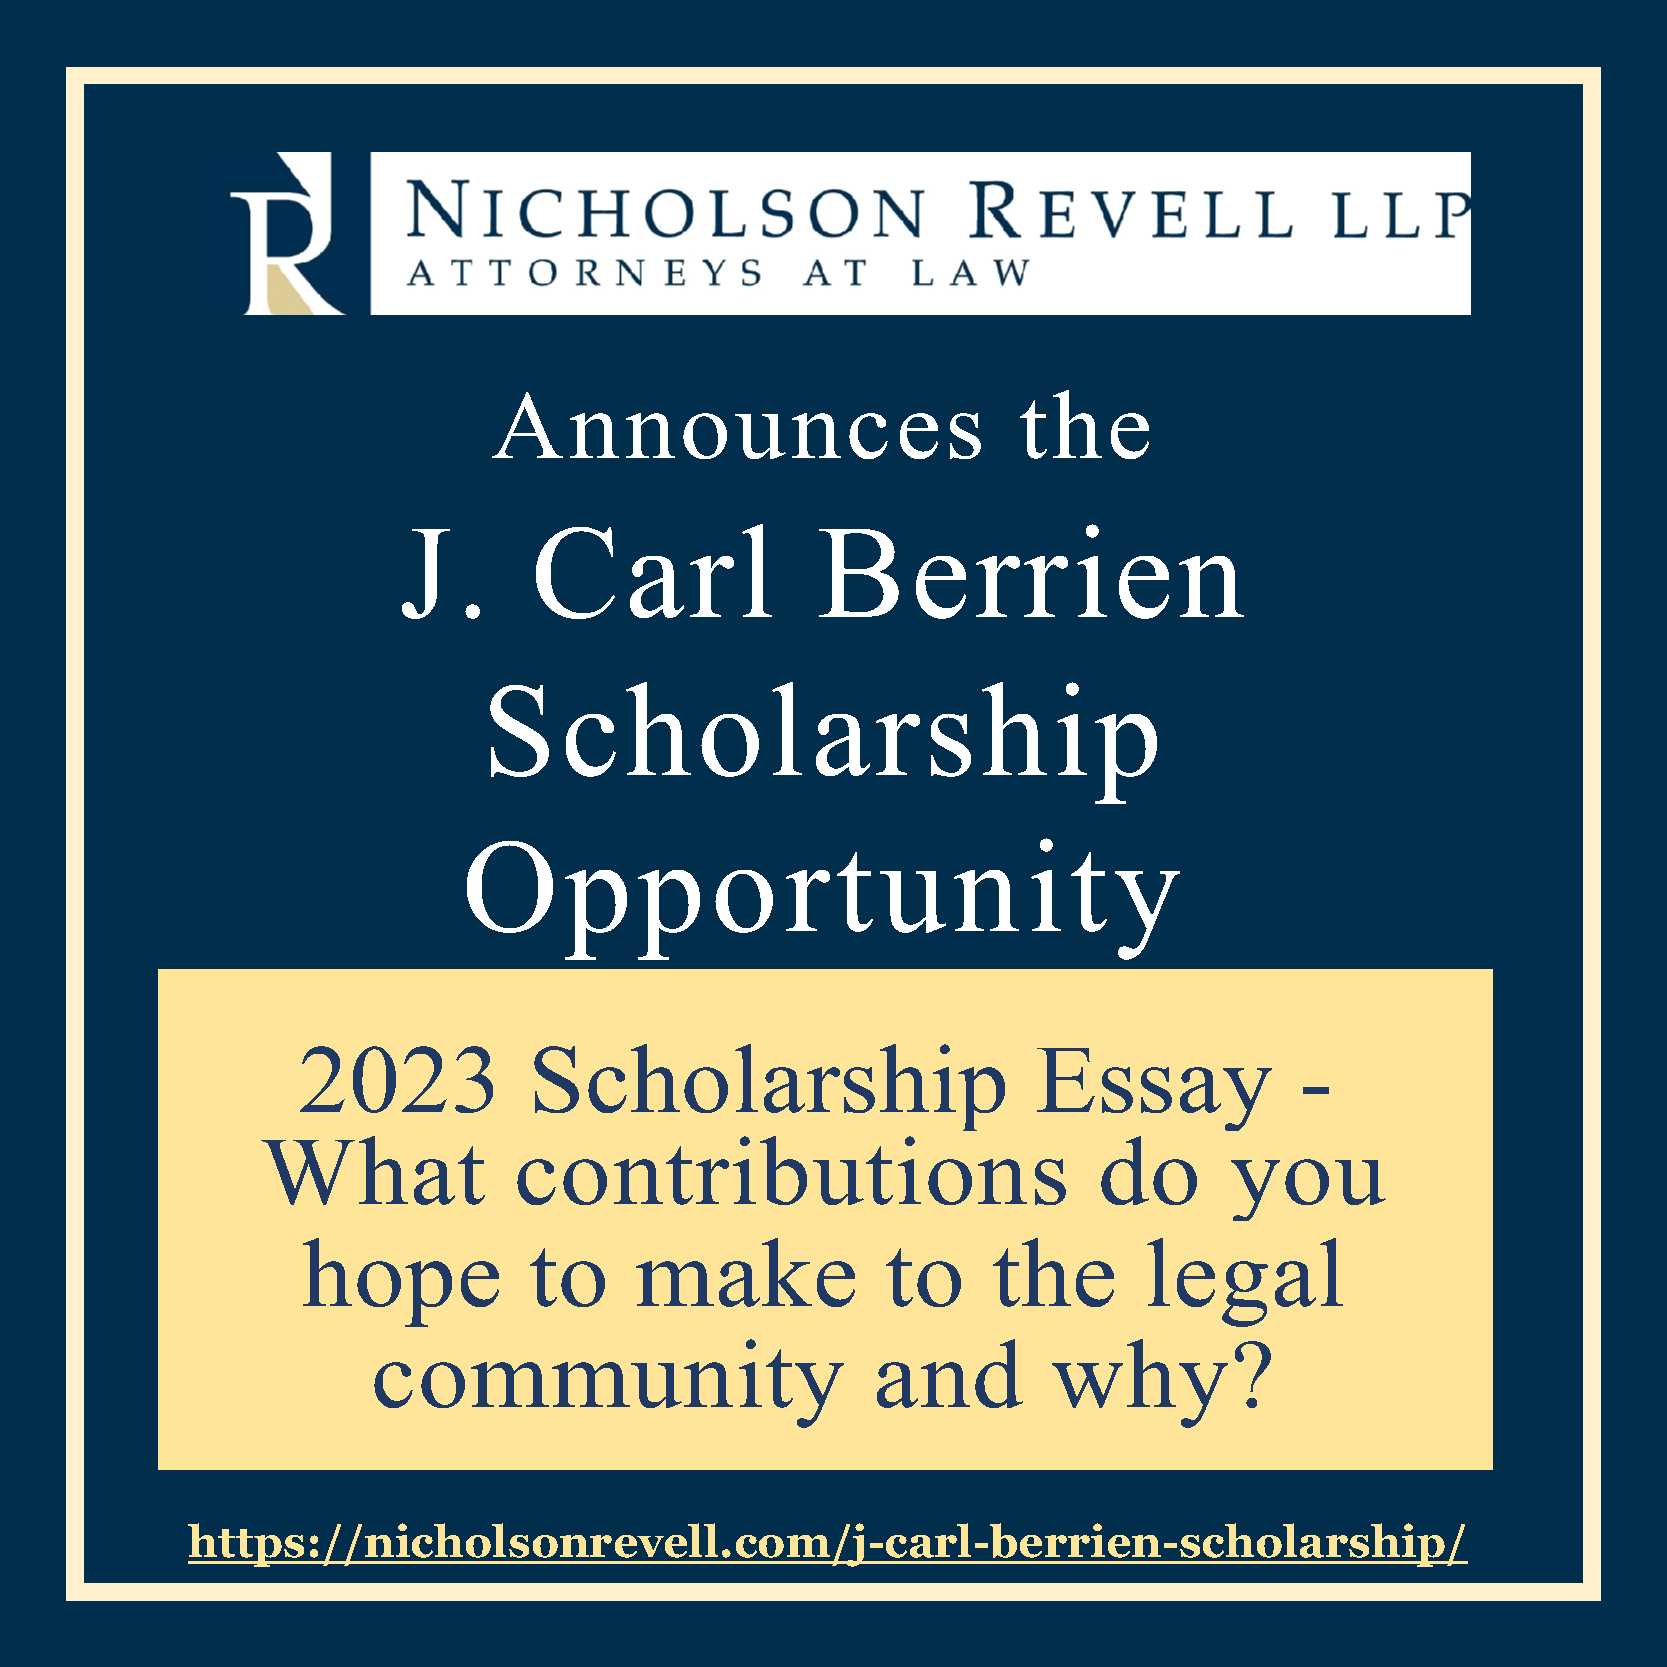 J. Carl Berrien Scholarship Opportunity